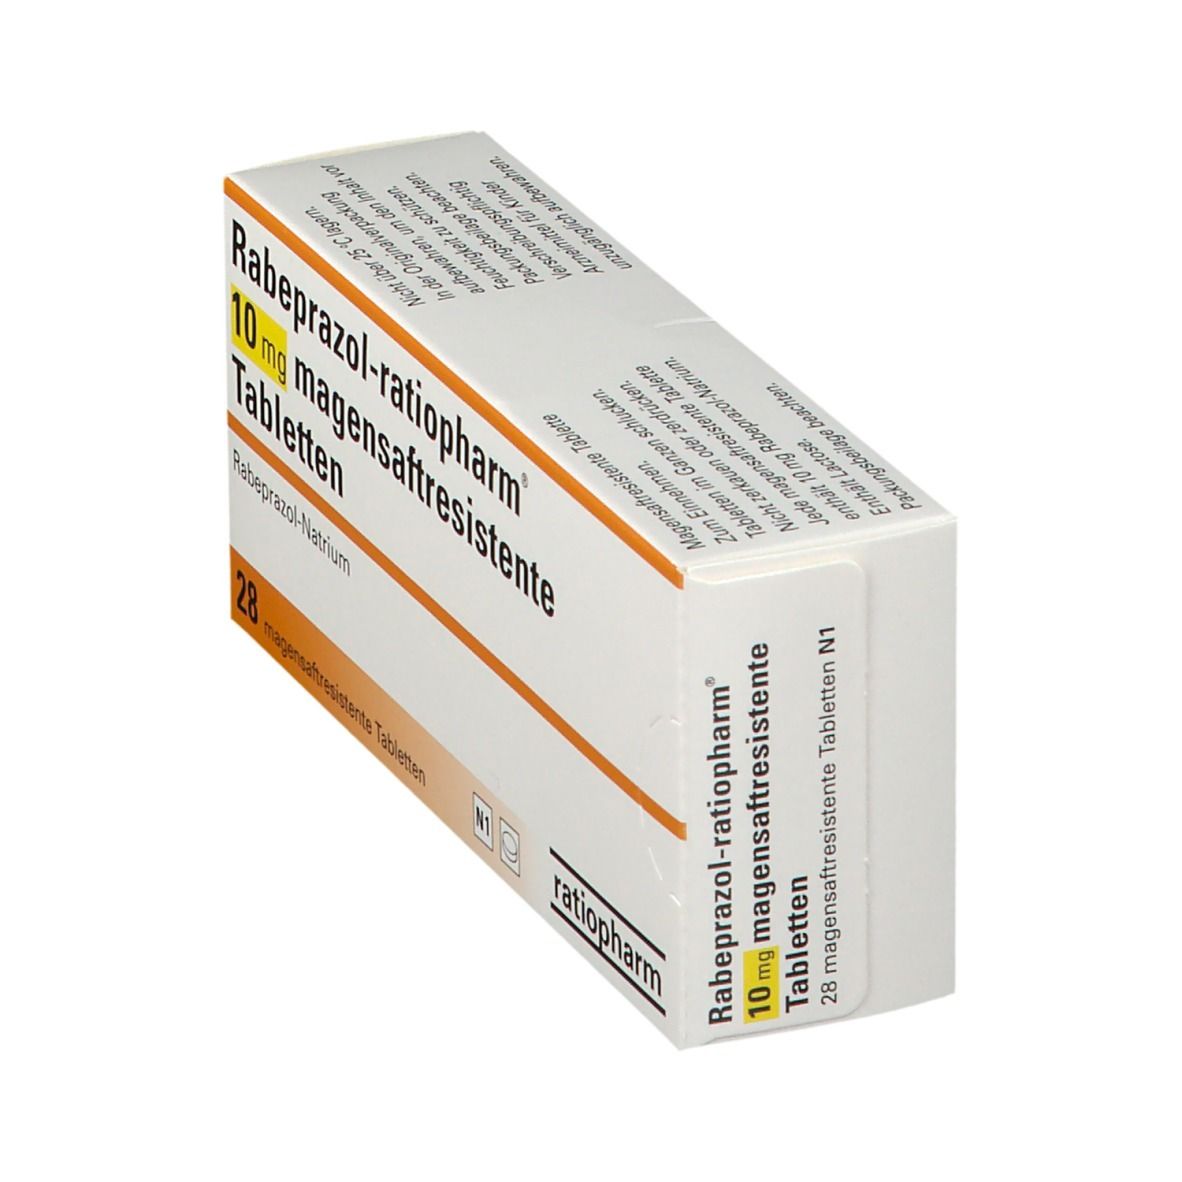 Rabeprazol-ratiopharm® 10 mg